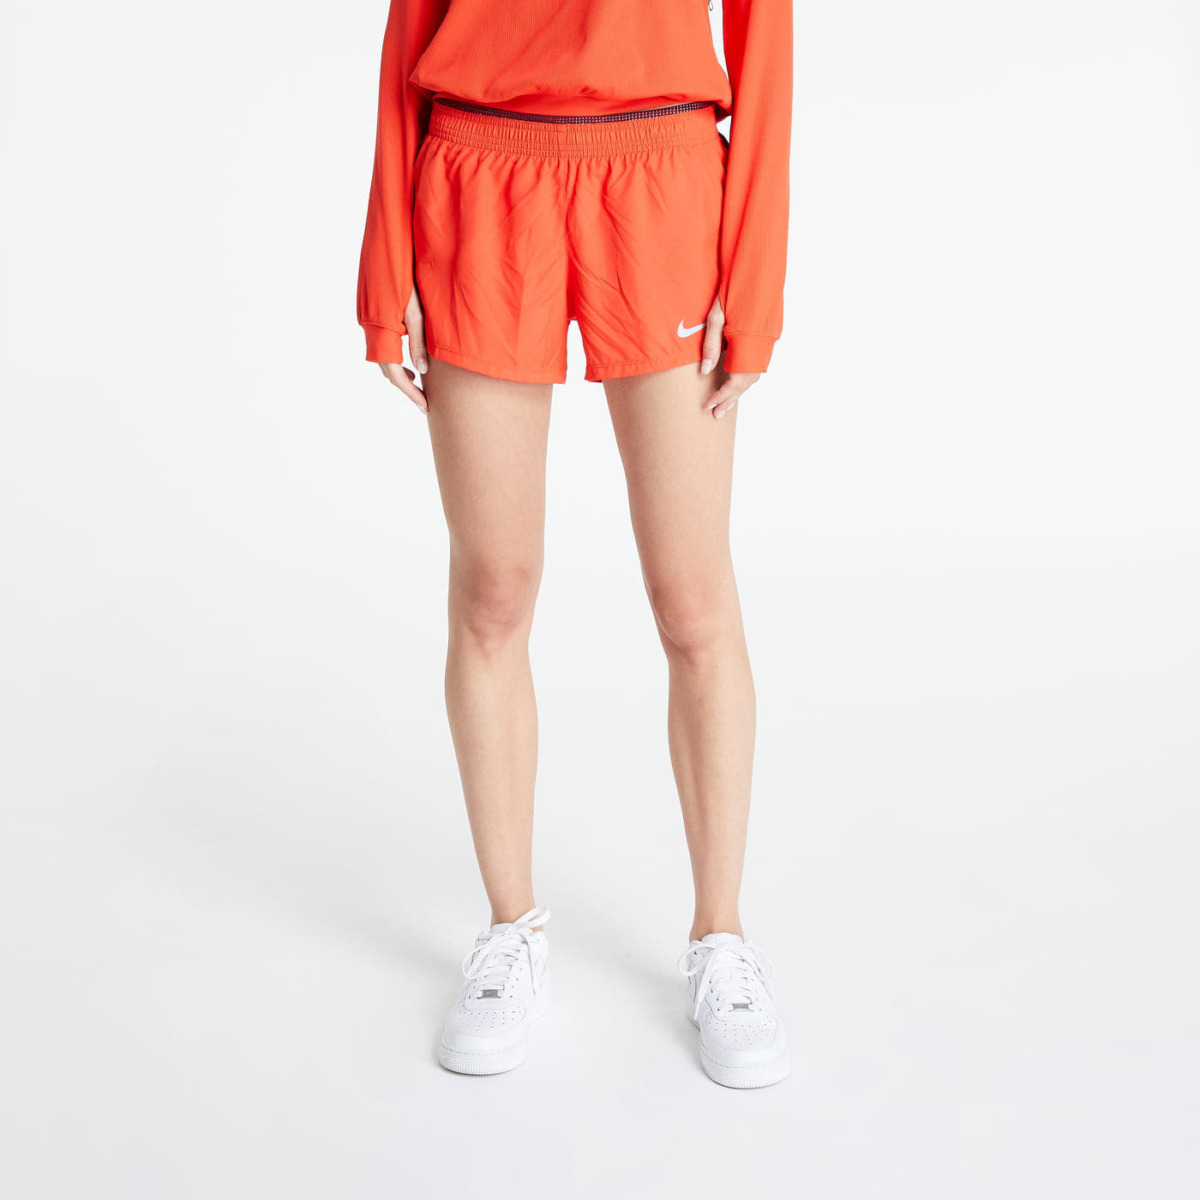 Footshop - Woman Shorts Orange Nike GOOFASH